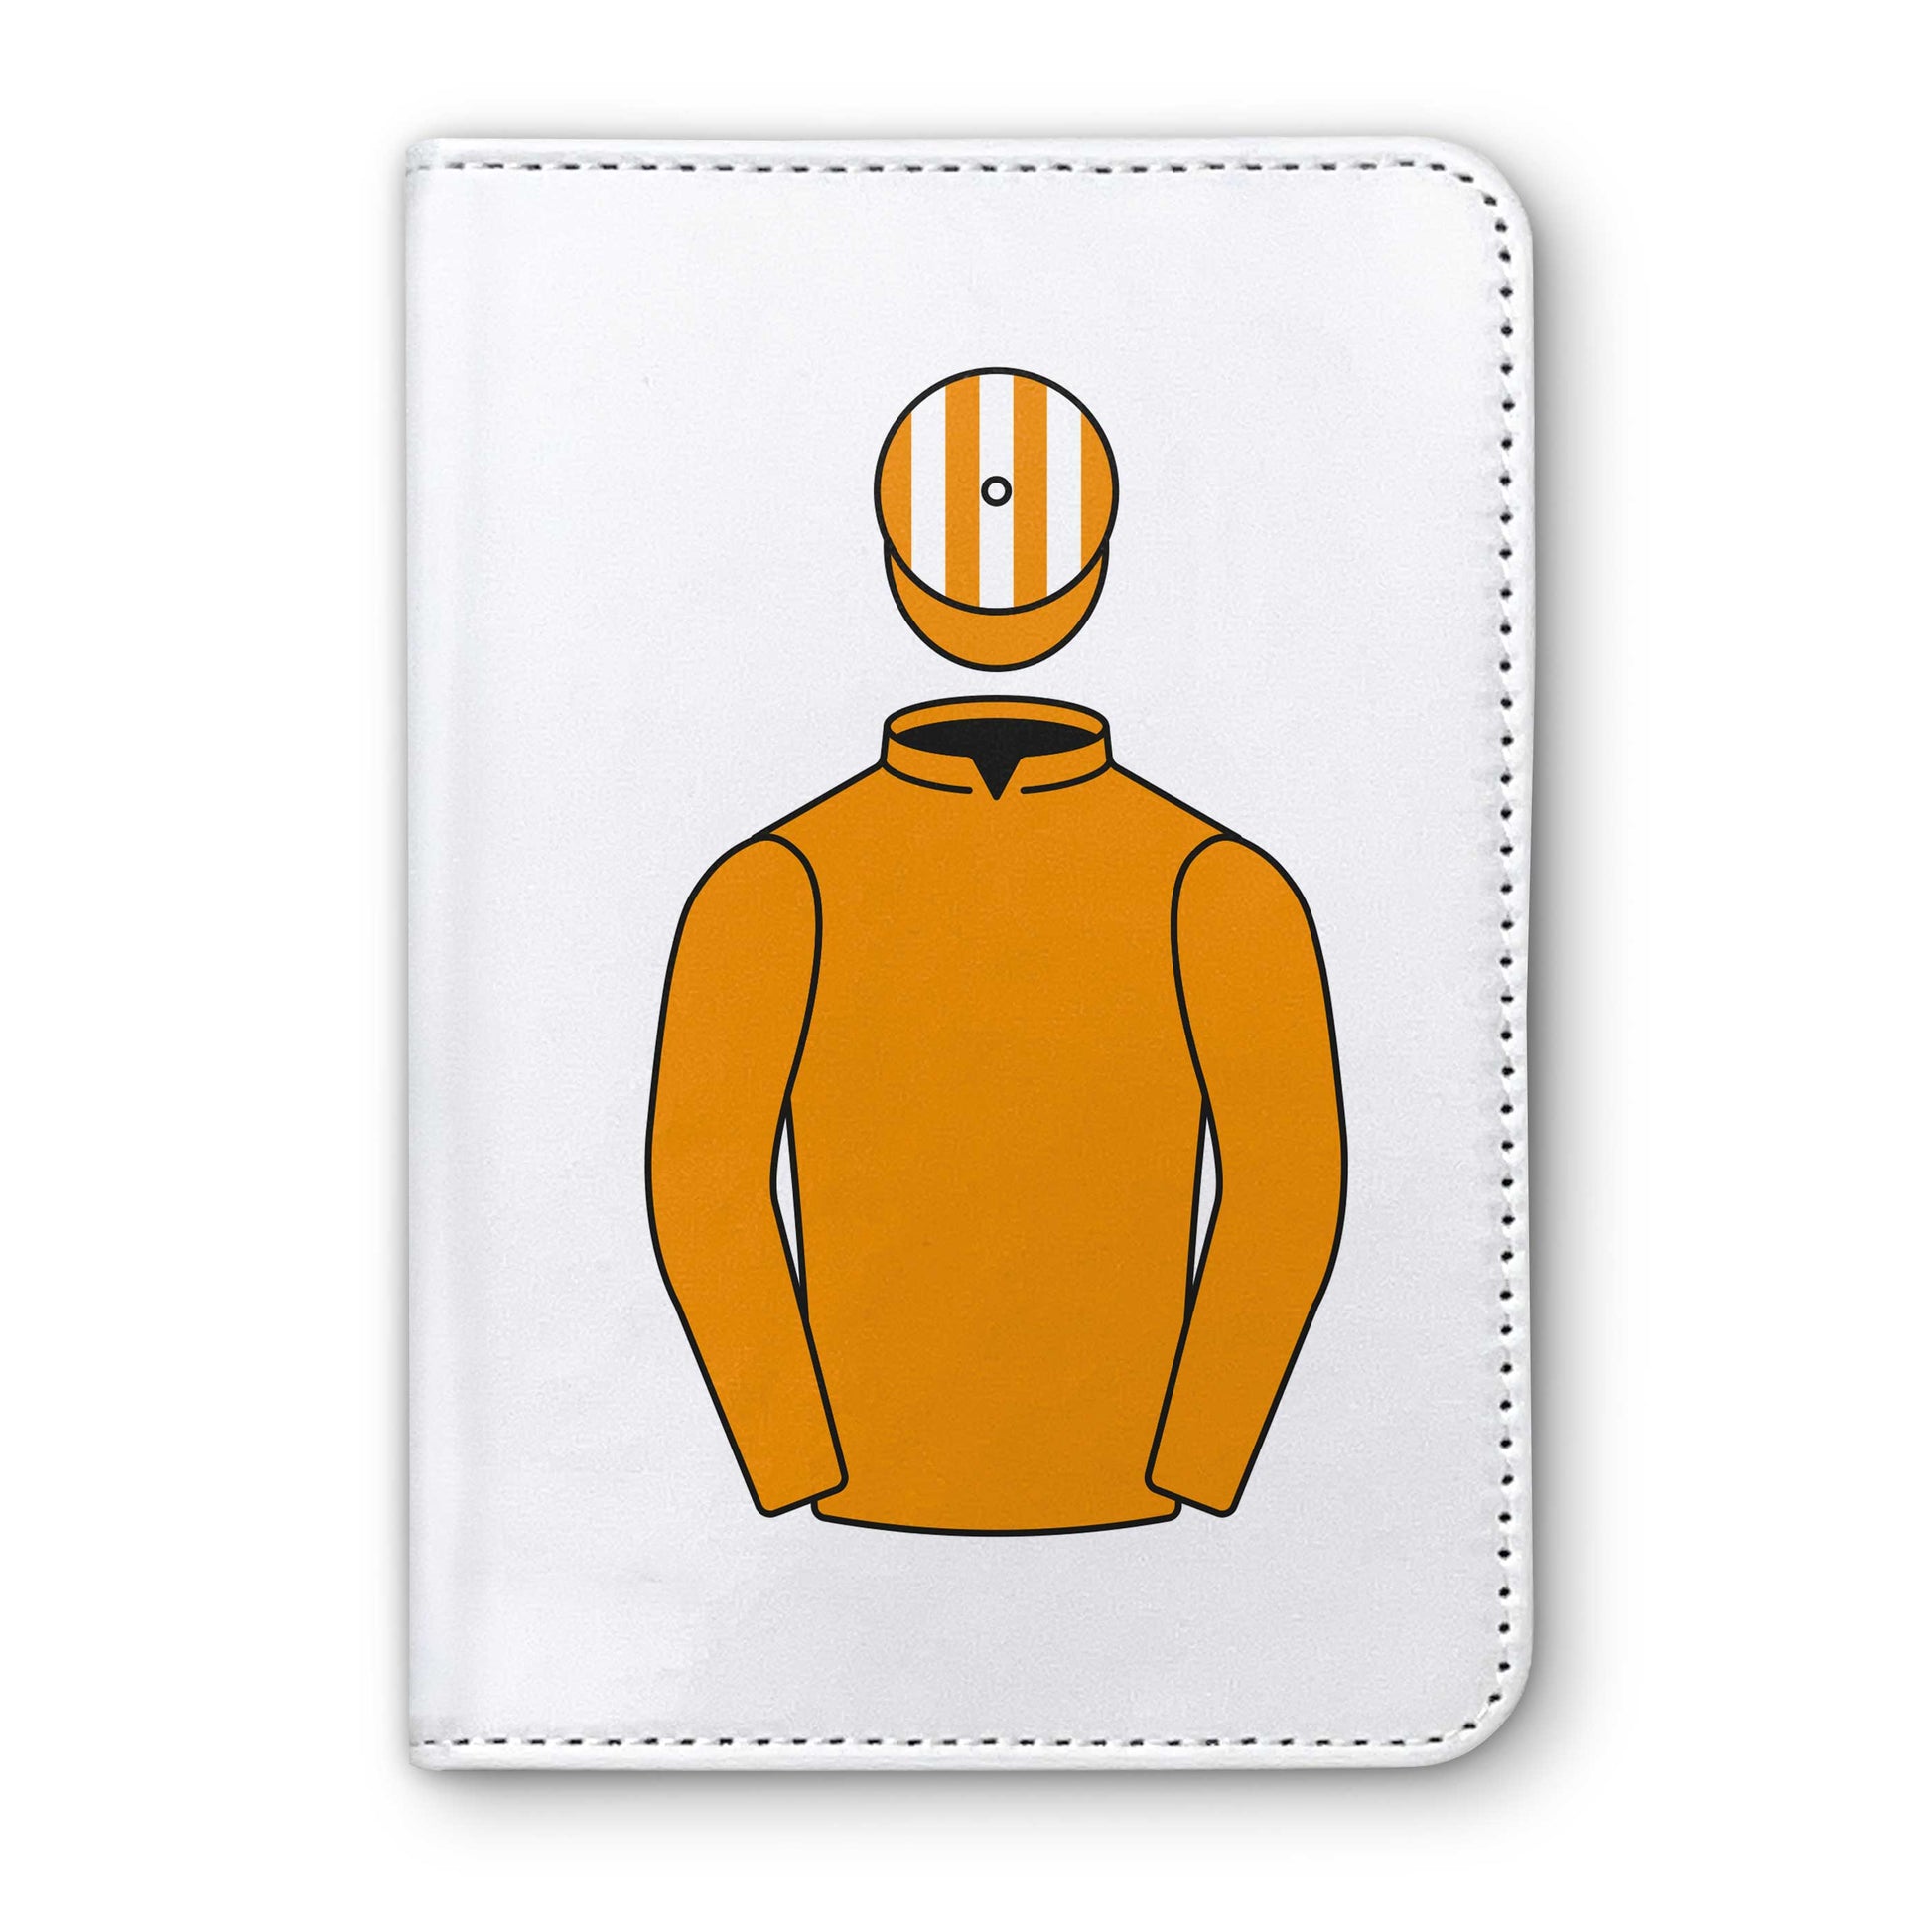 Aidan J O Ryan Horse Racing Passport Holder - Hacked Up Horse Racing Gifts